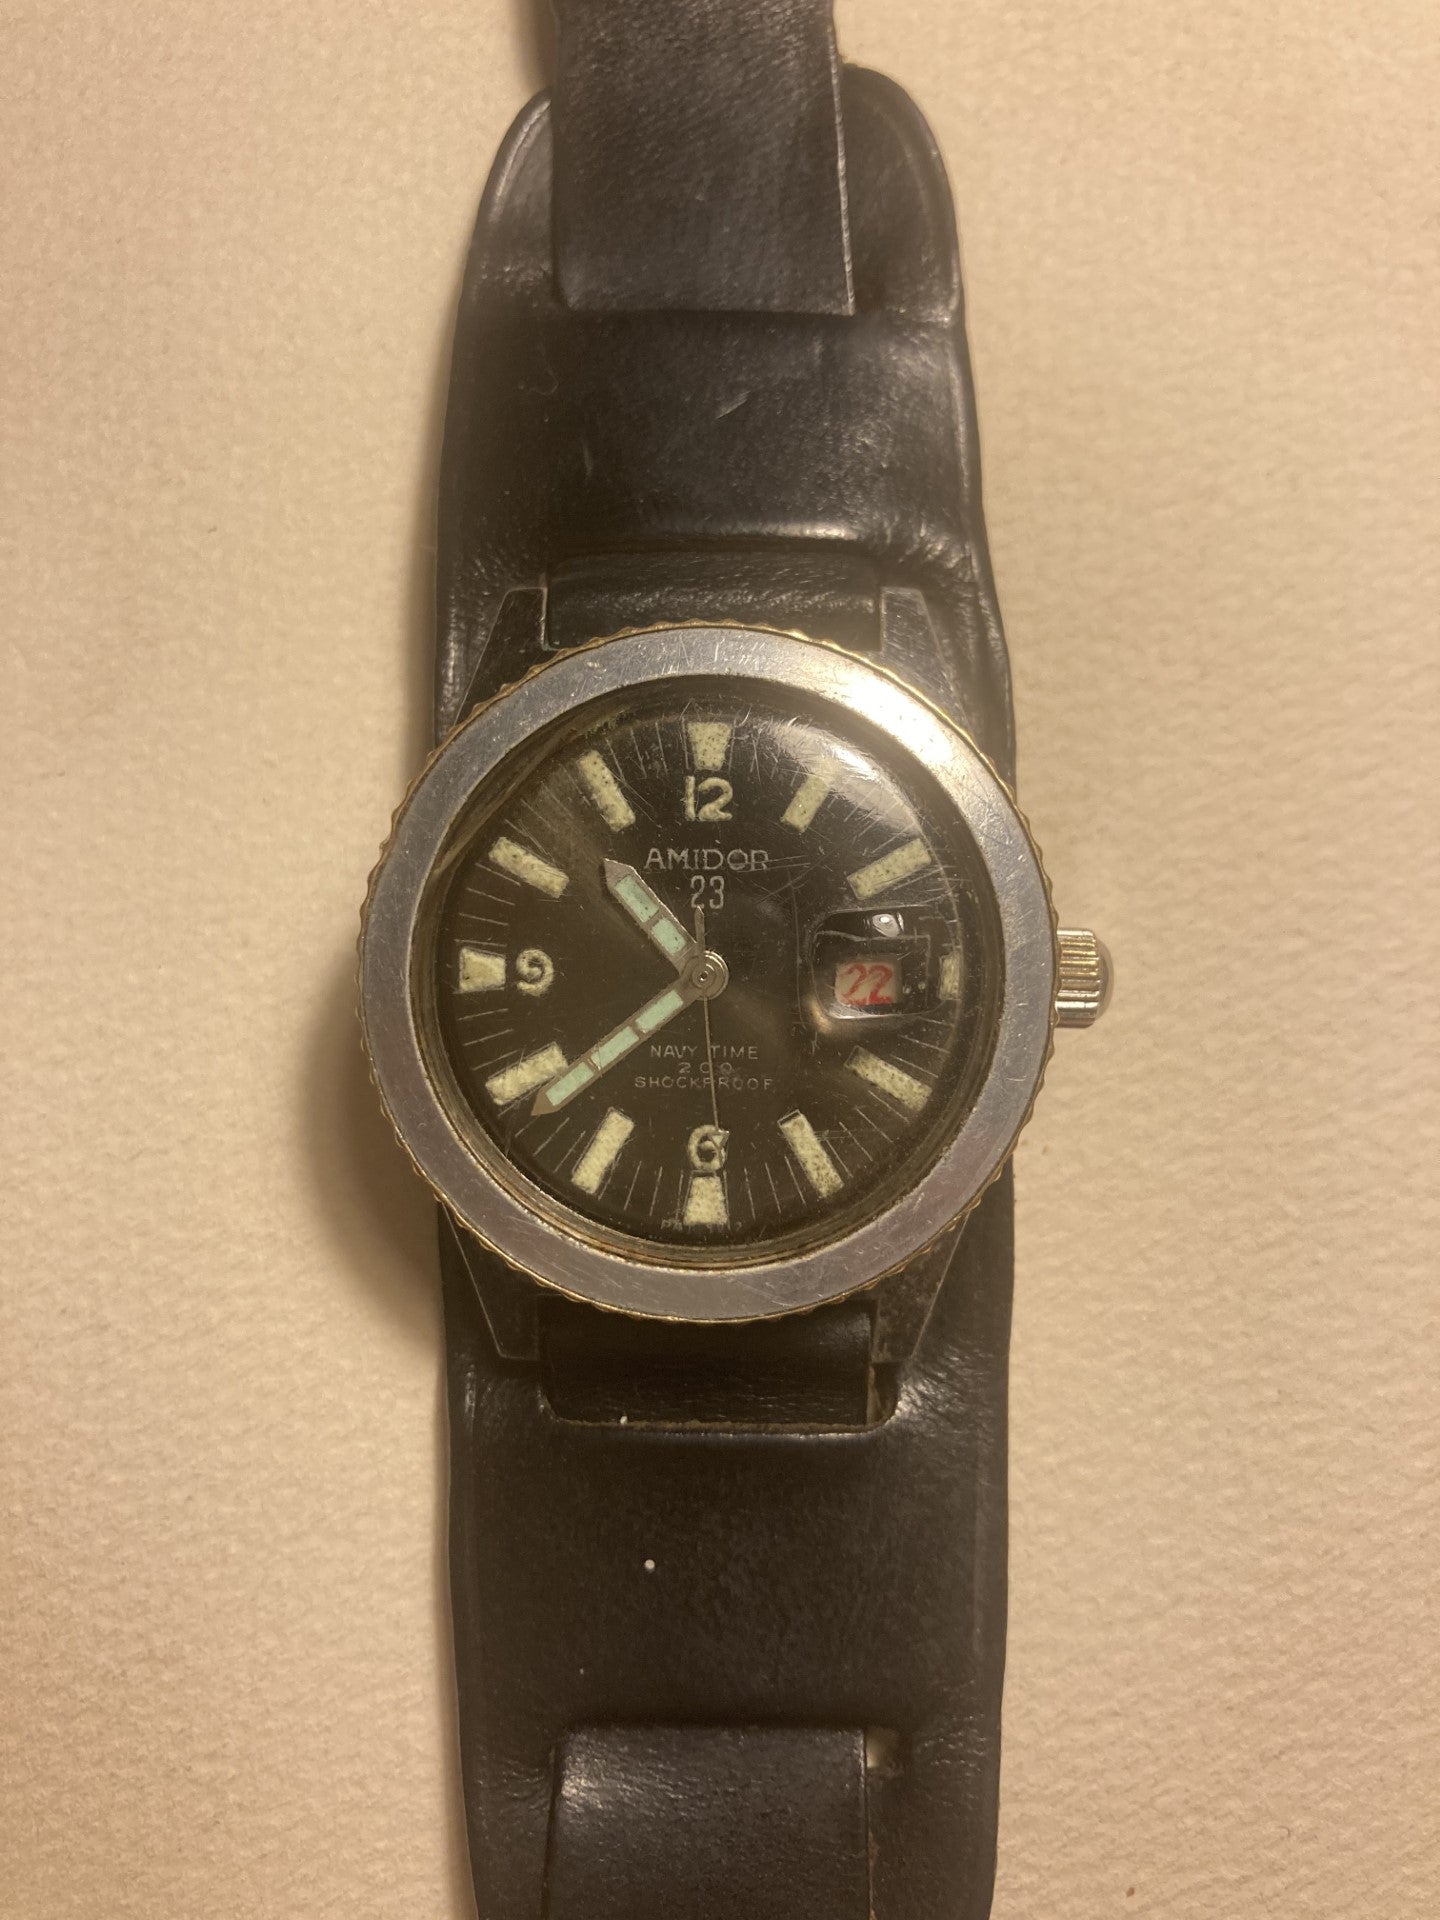 Men's watch/diver's watch Amidor 23, Navy Time 200 - no. 01070